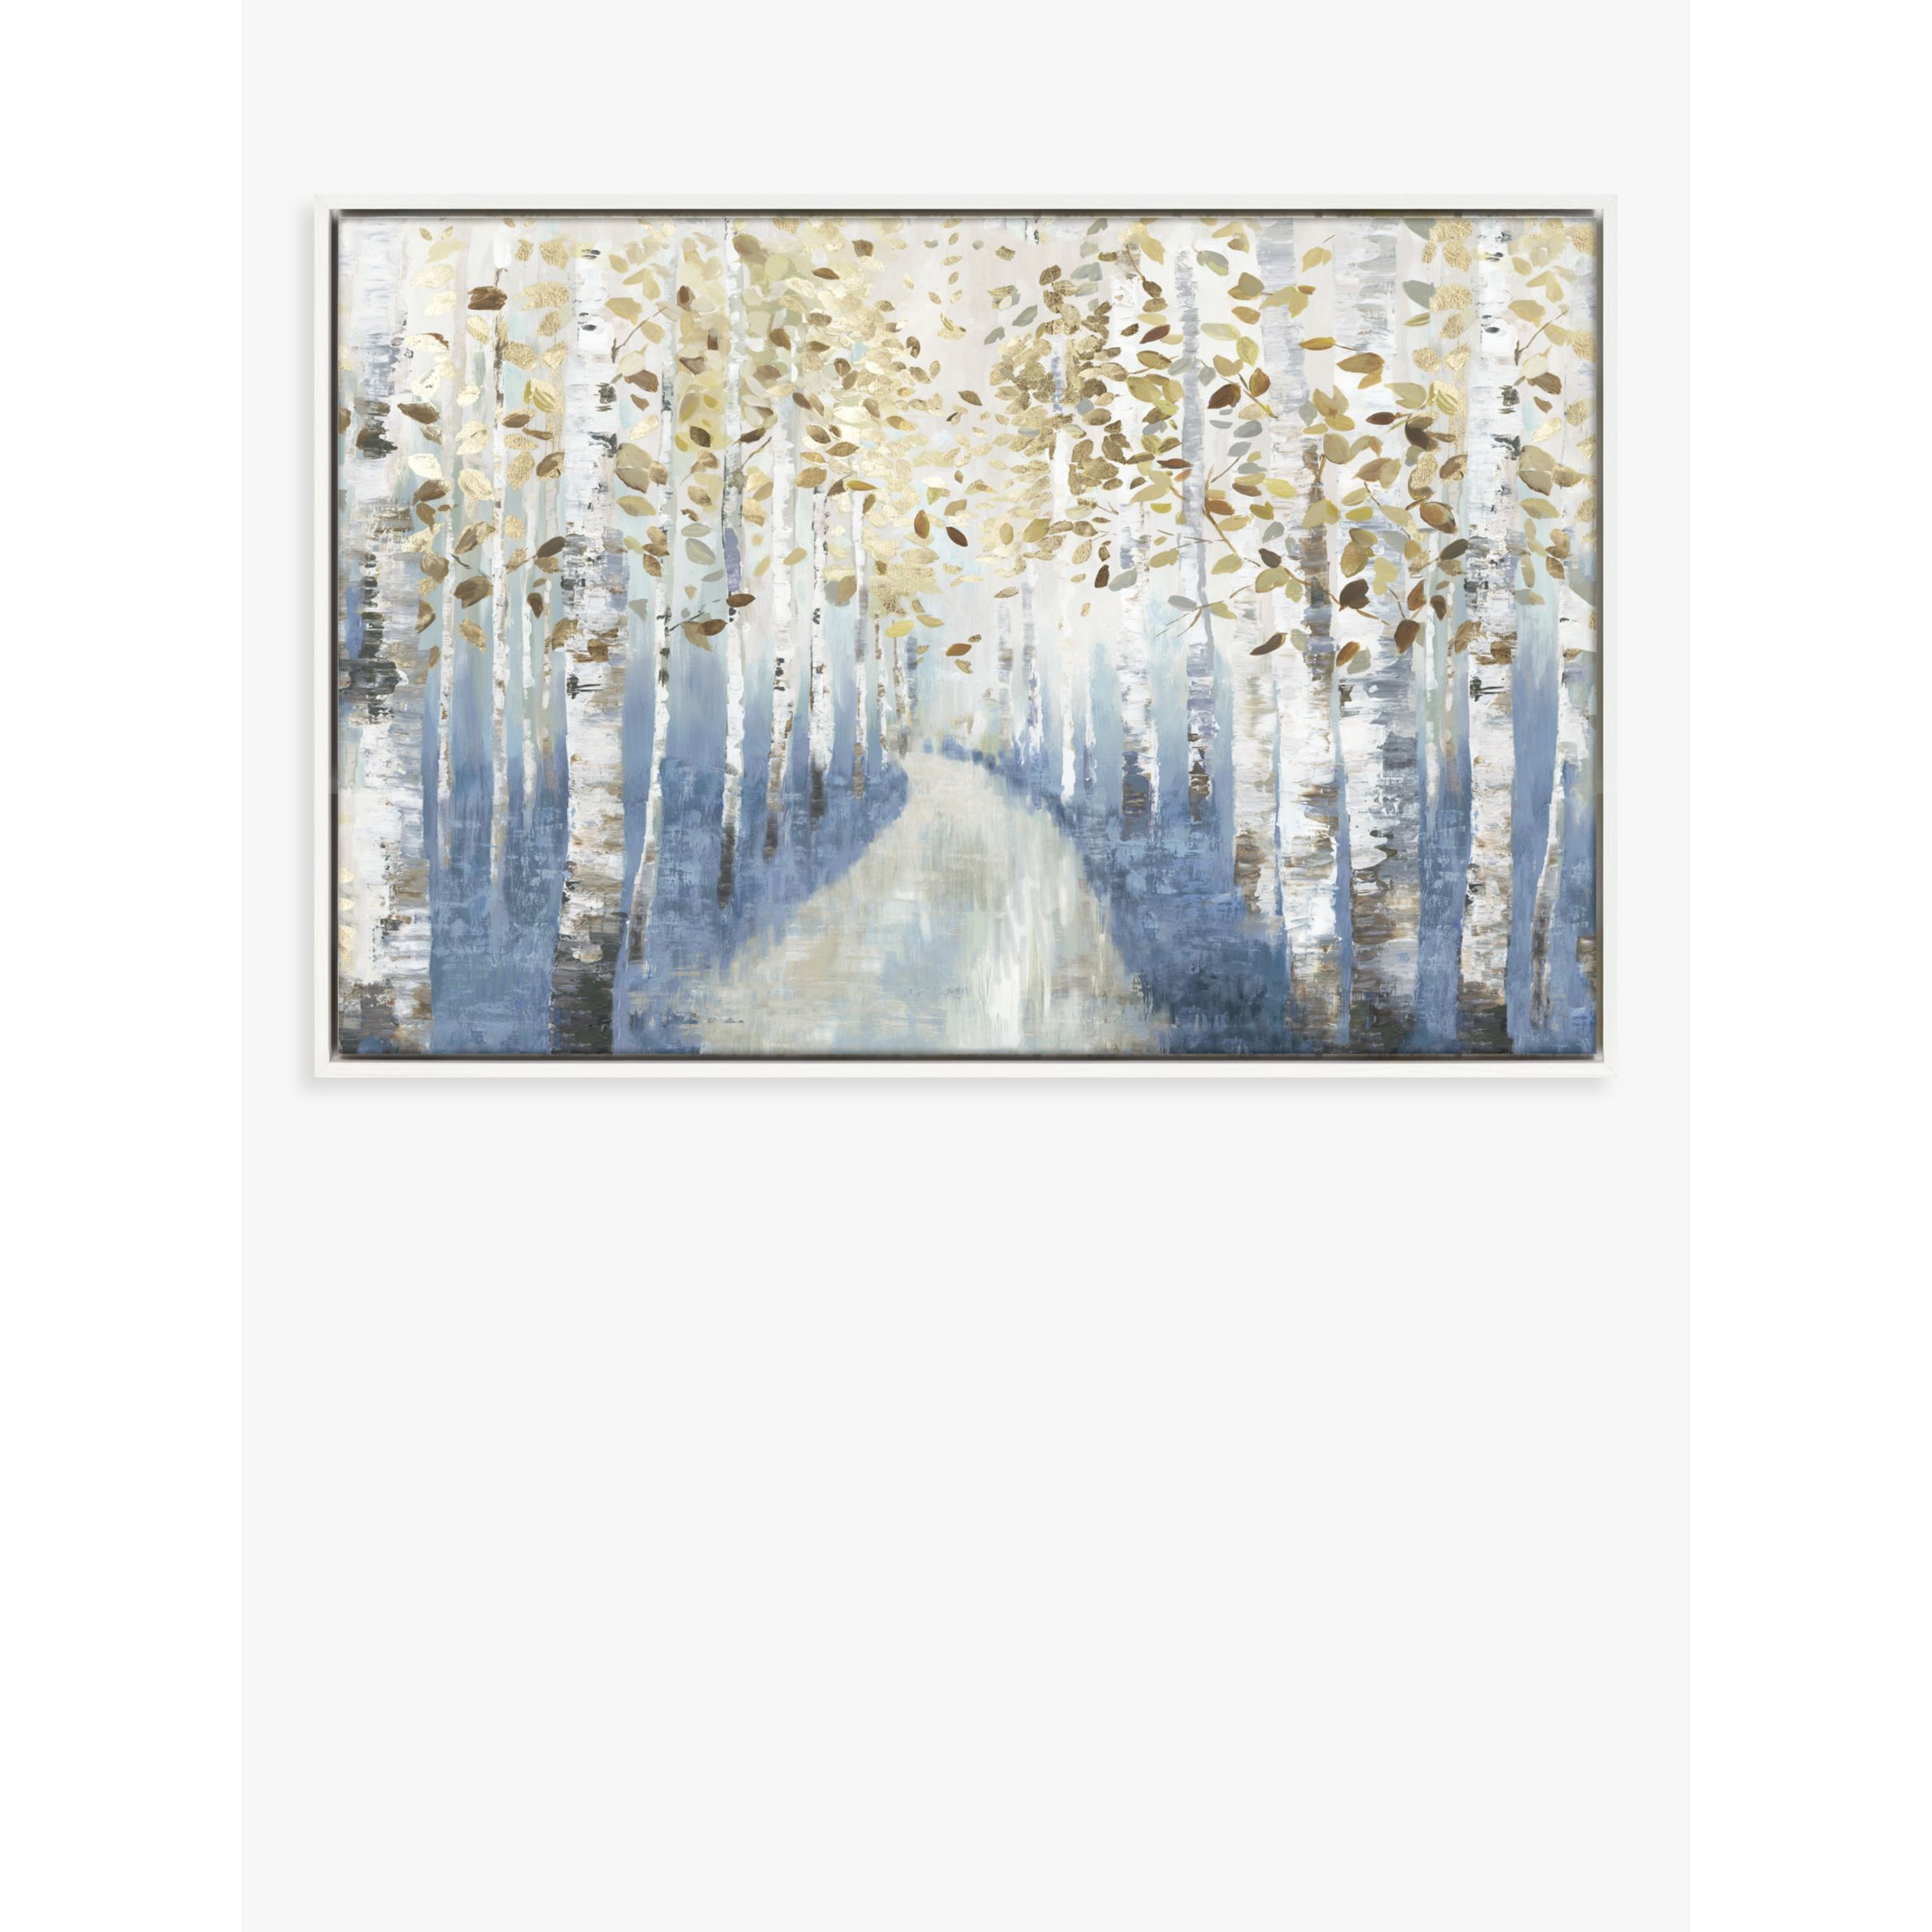 Allison Pearce - 'New Path I' Framed Canvas Print, 64 x 94cm, Blue/Multi - image 1